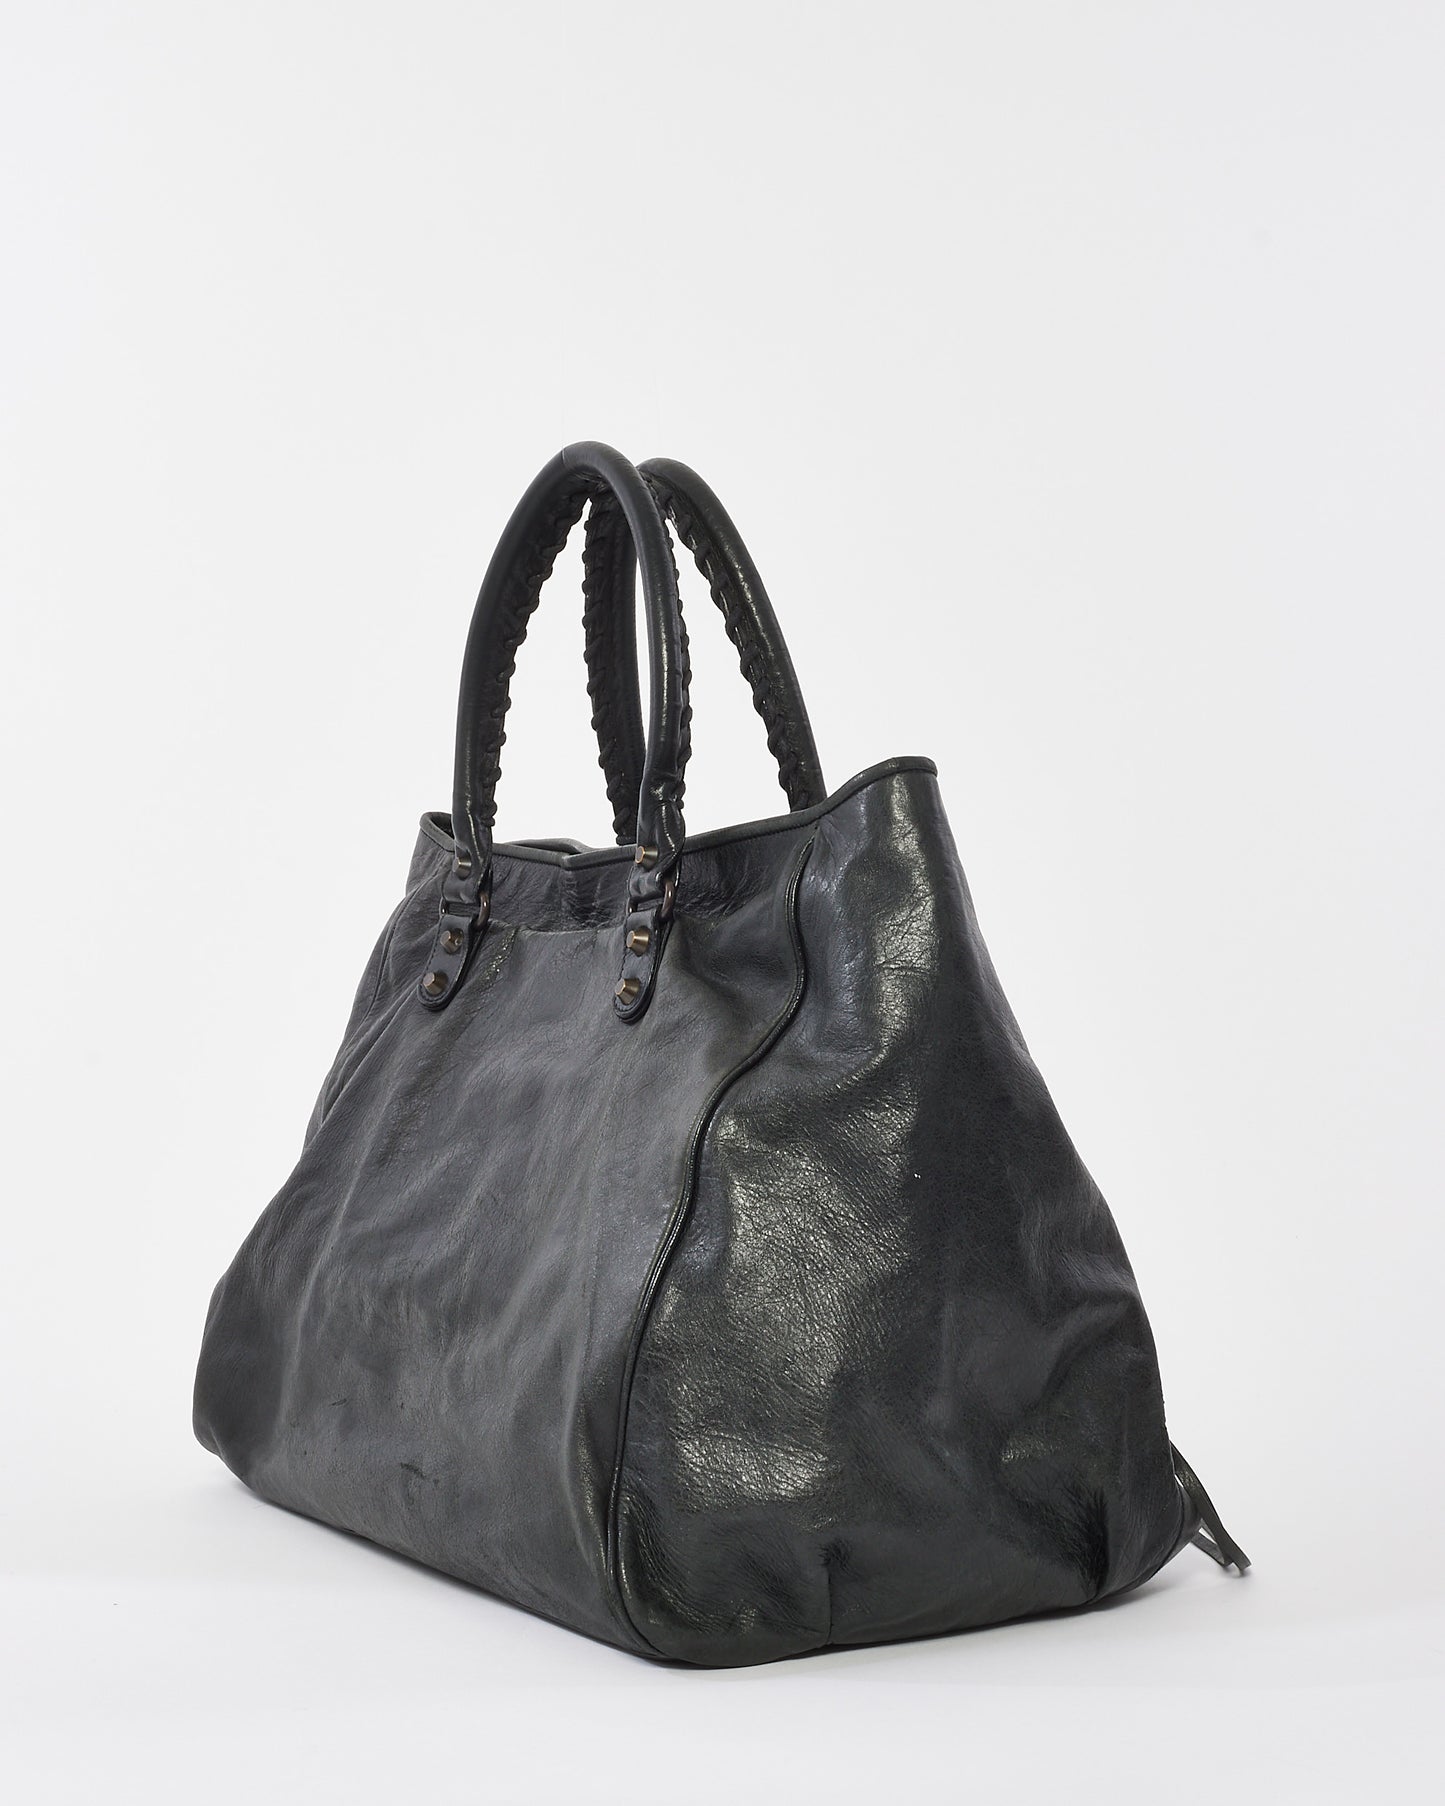 Balenciaga Black Leather Large Sunday Tote Bag